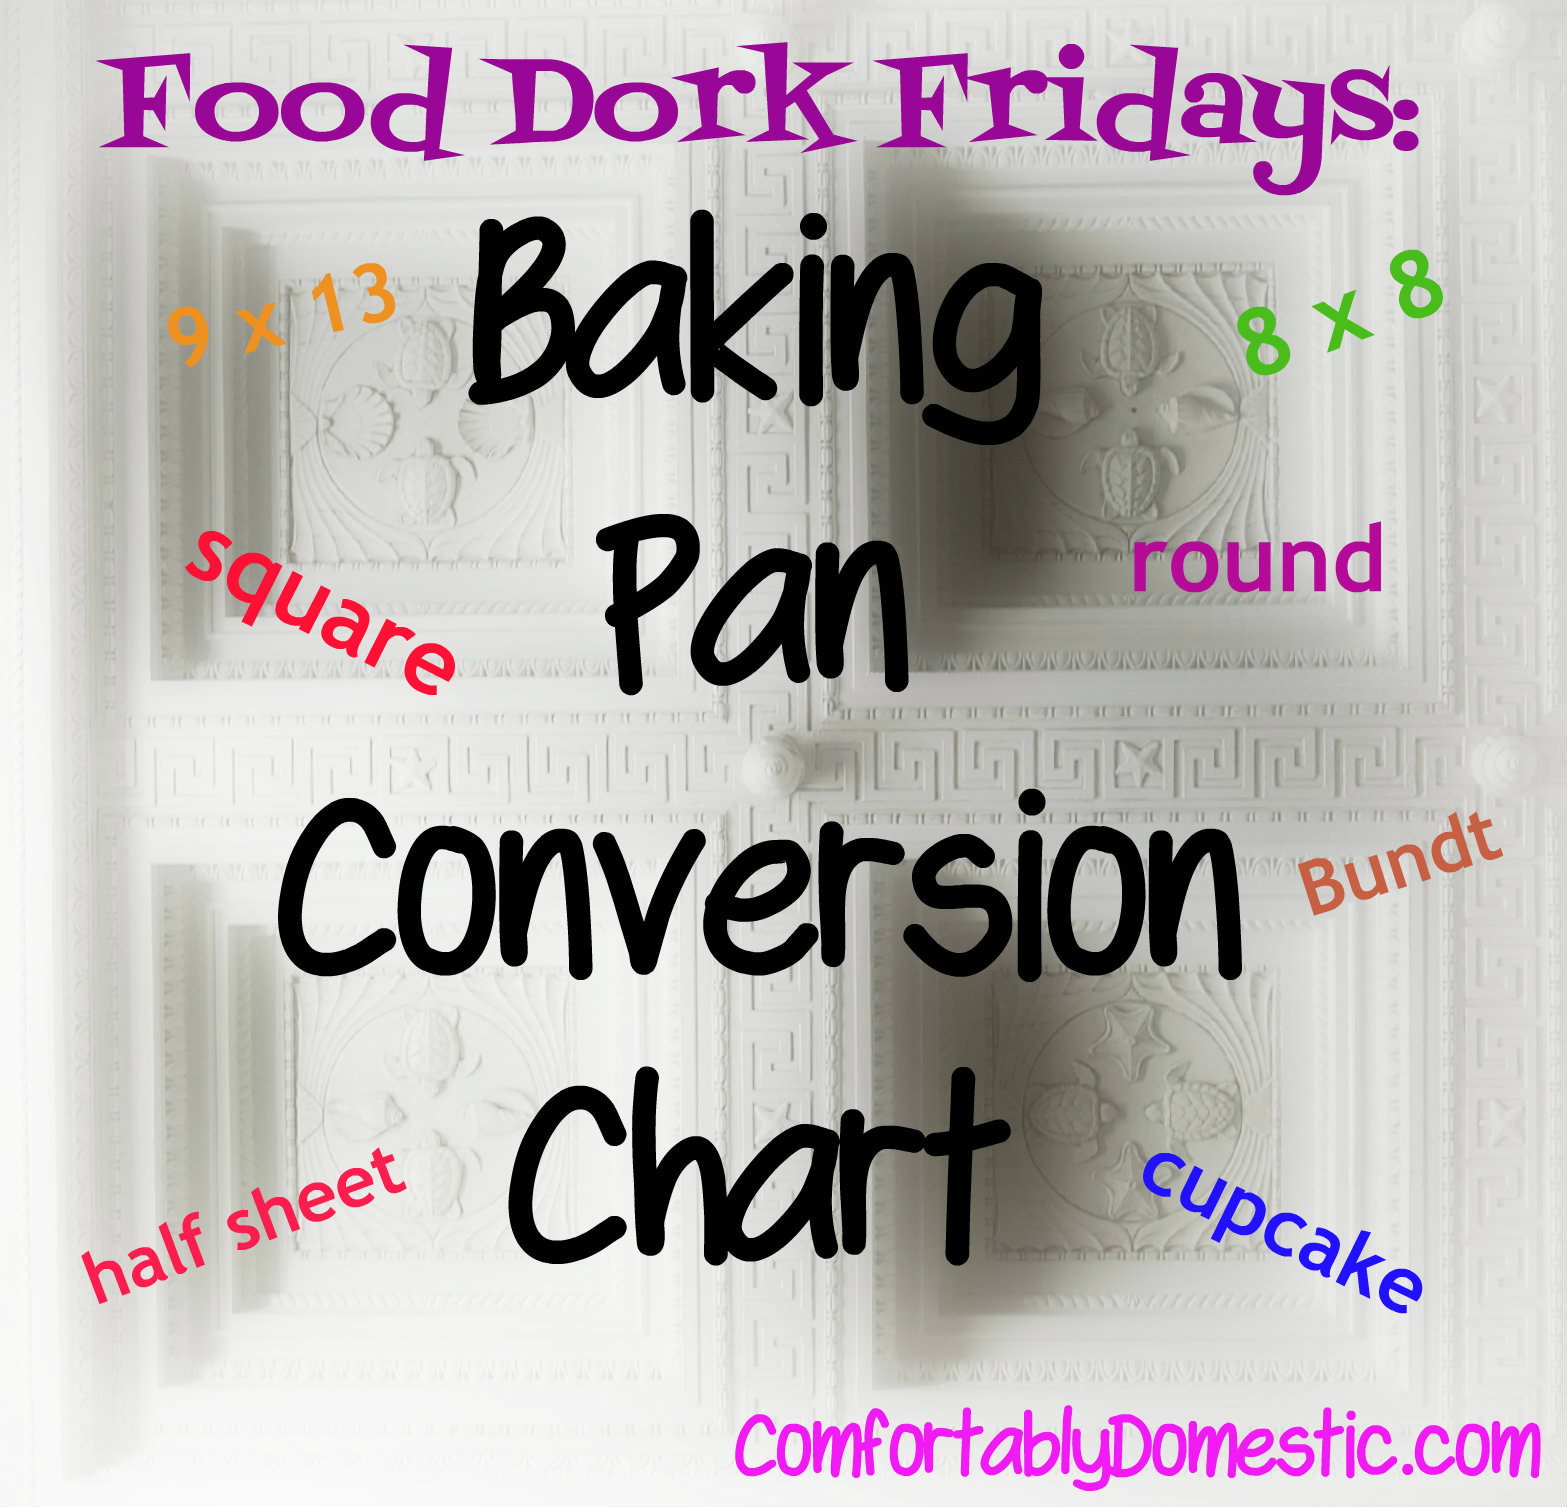 Baking Pan Conversion Chart | ComfortablyDomestic.com